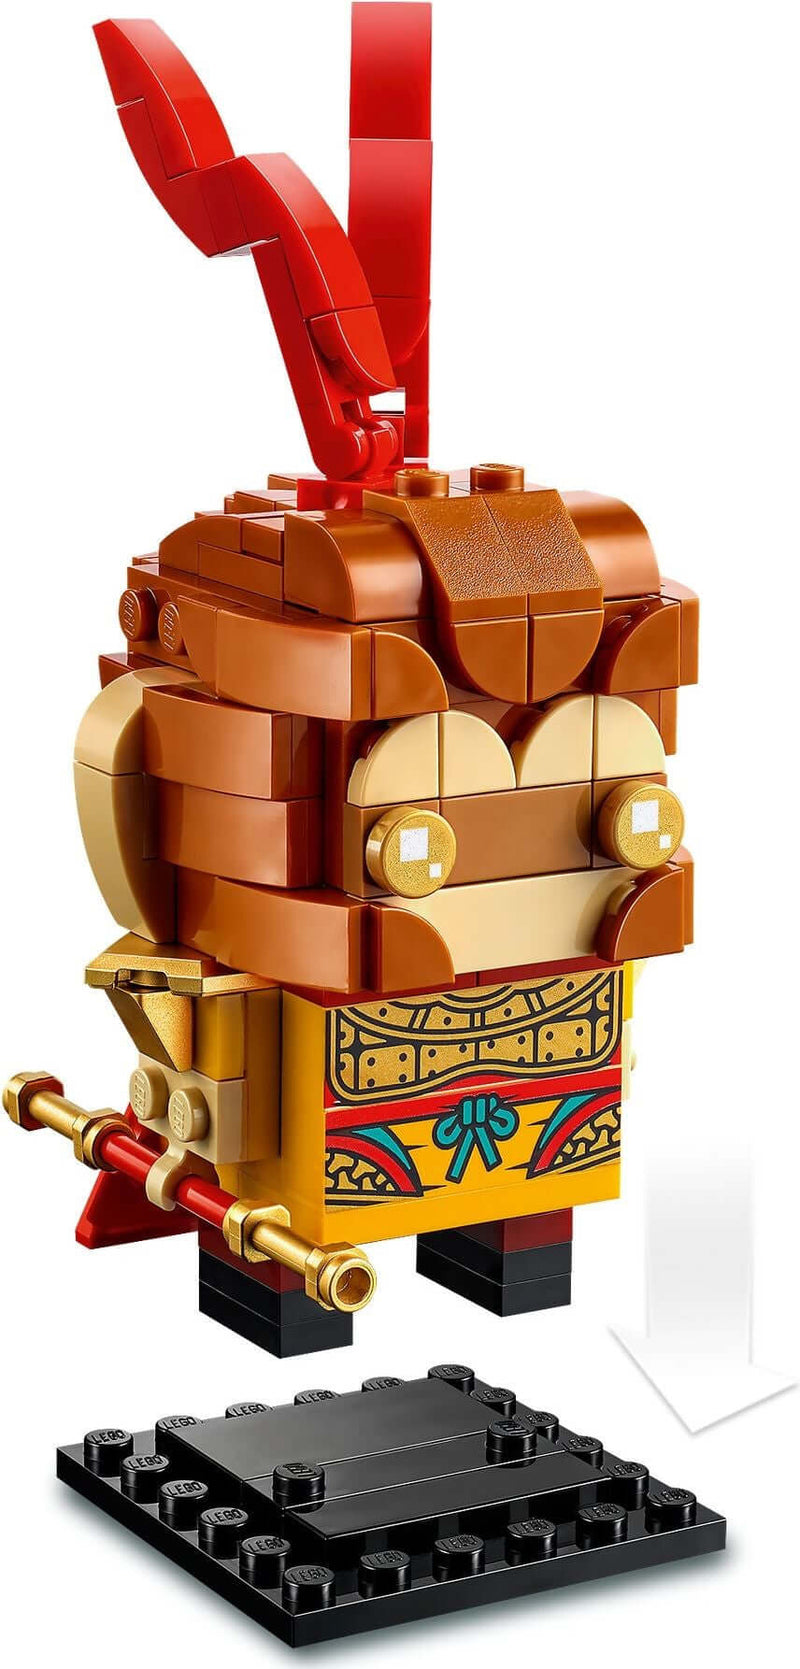 LEGO BrickHeadz 40381 Monkey King